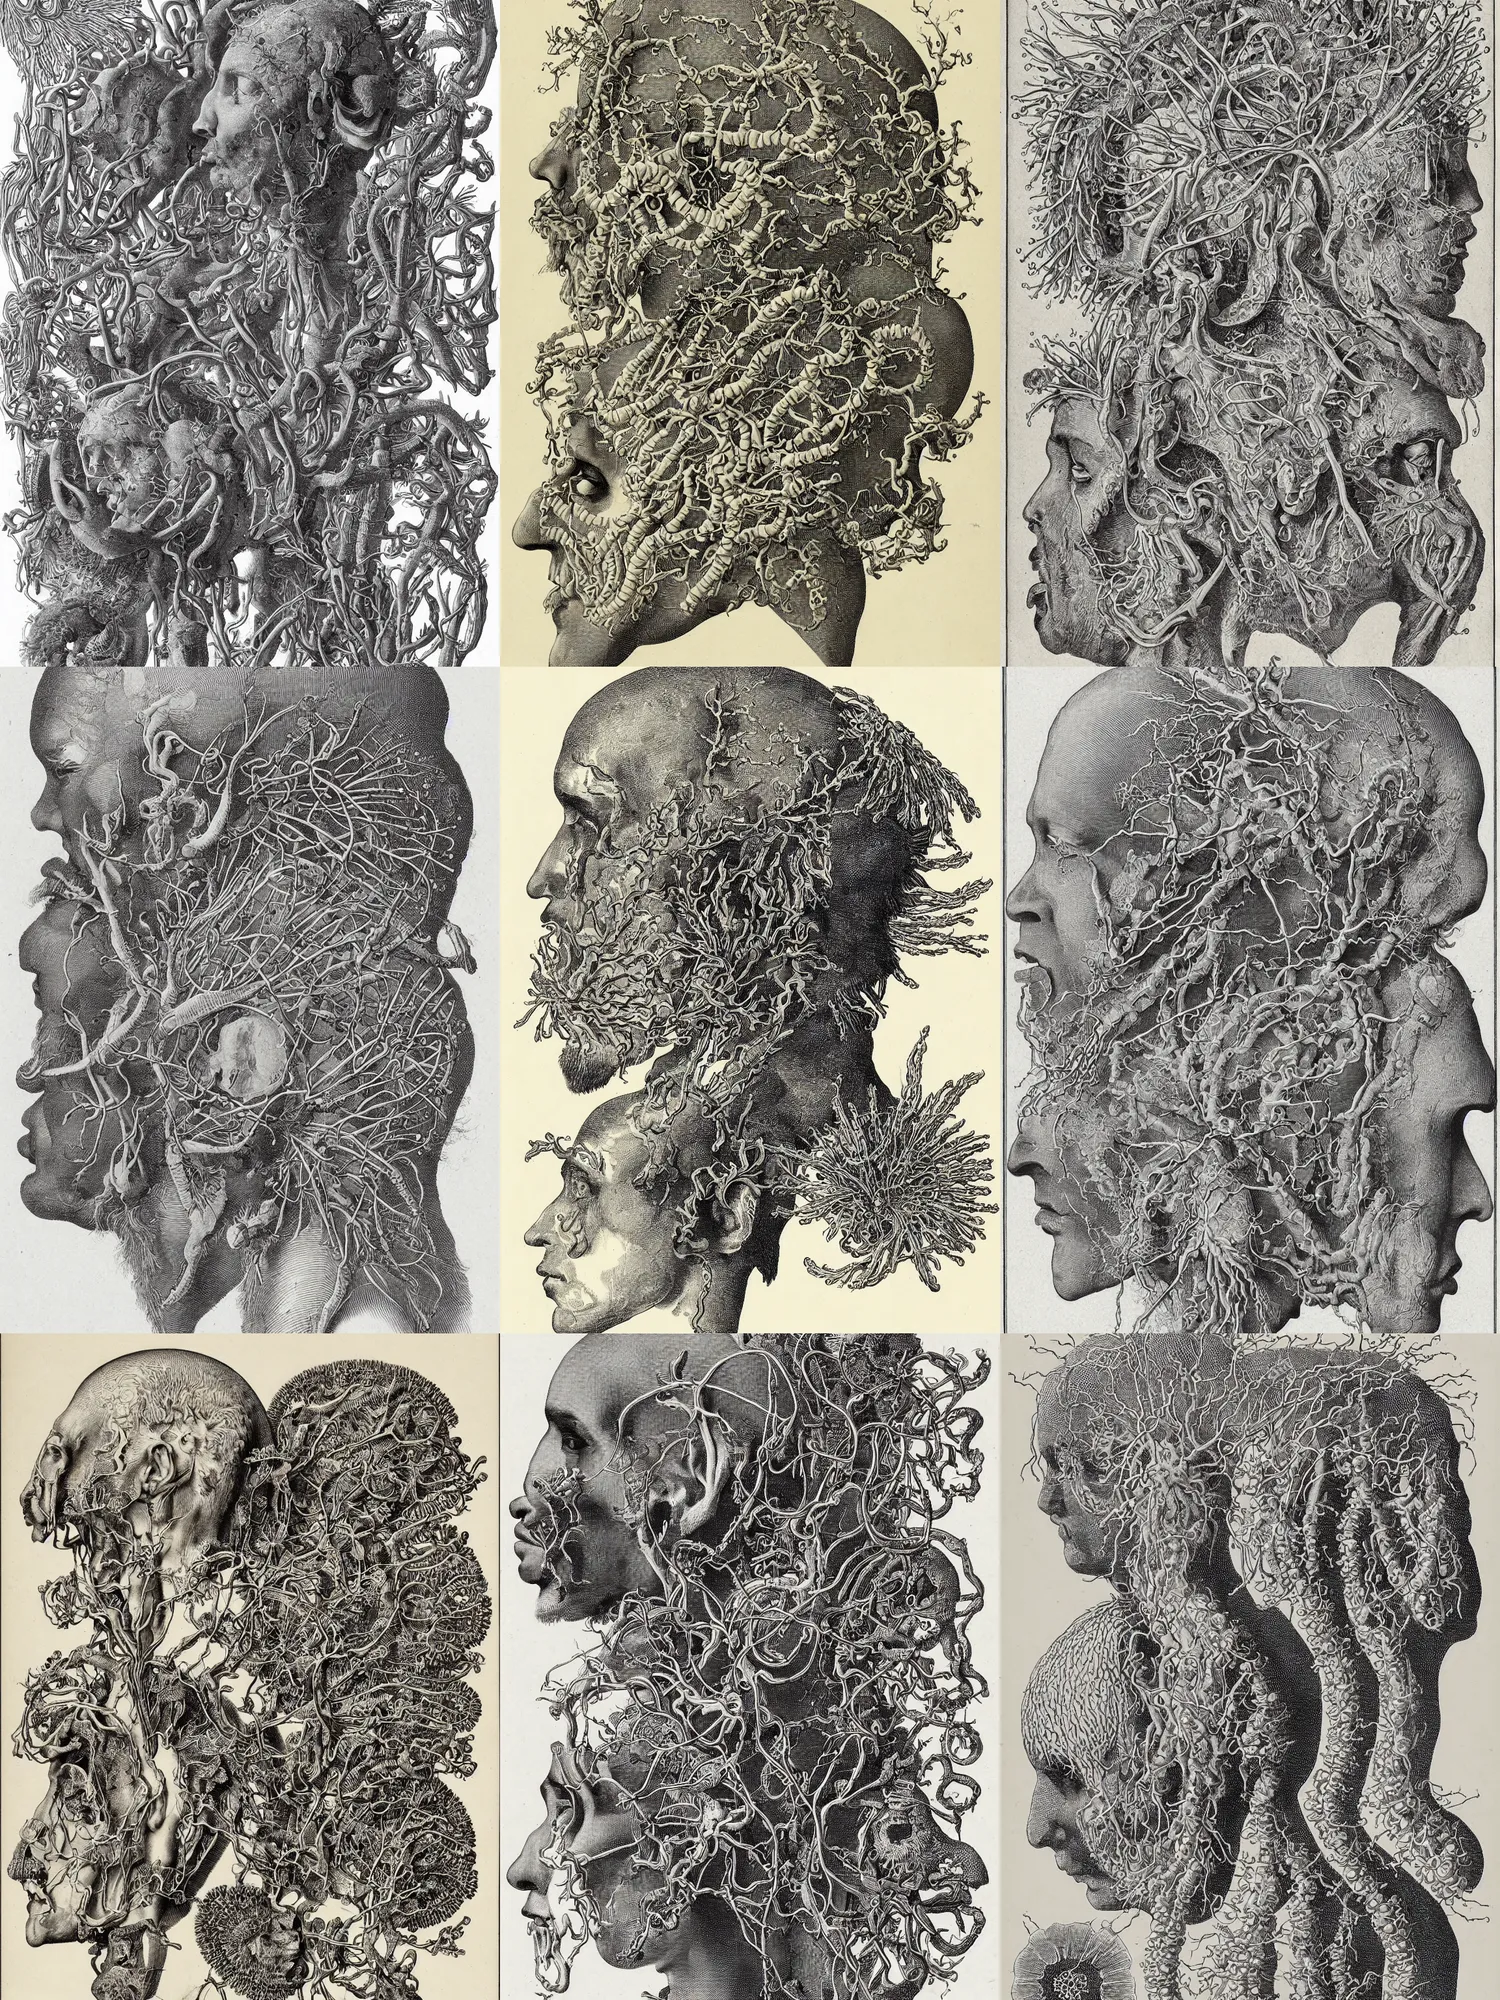 Prompt: indie rockstar head specimen, illustrated by ernst haeckel in the nineteenth century, very detailed